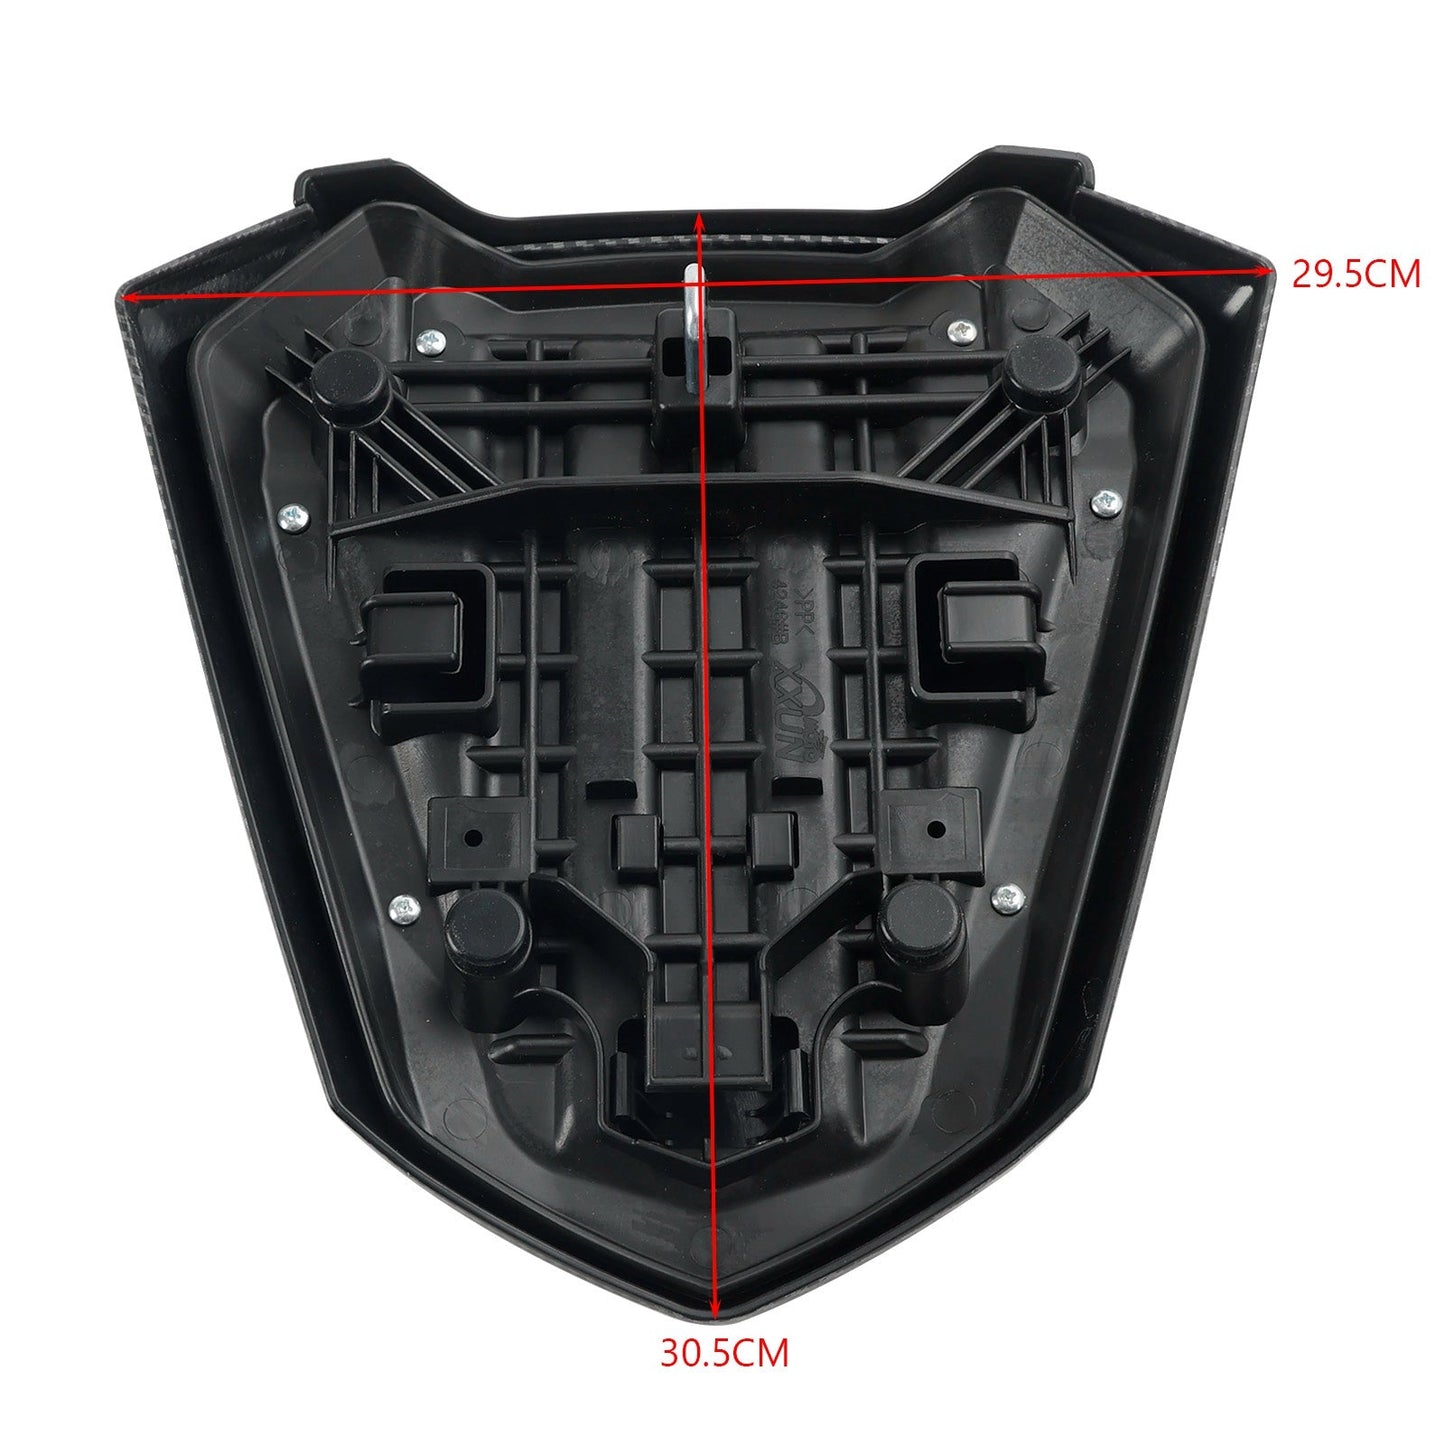 2022-2023 Honda CB500F Rear Tail Seat Fairing Cover